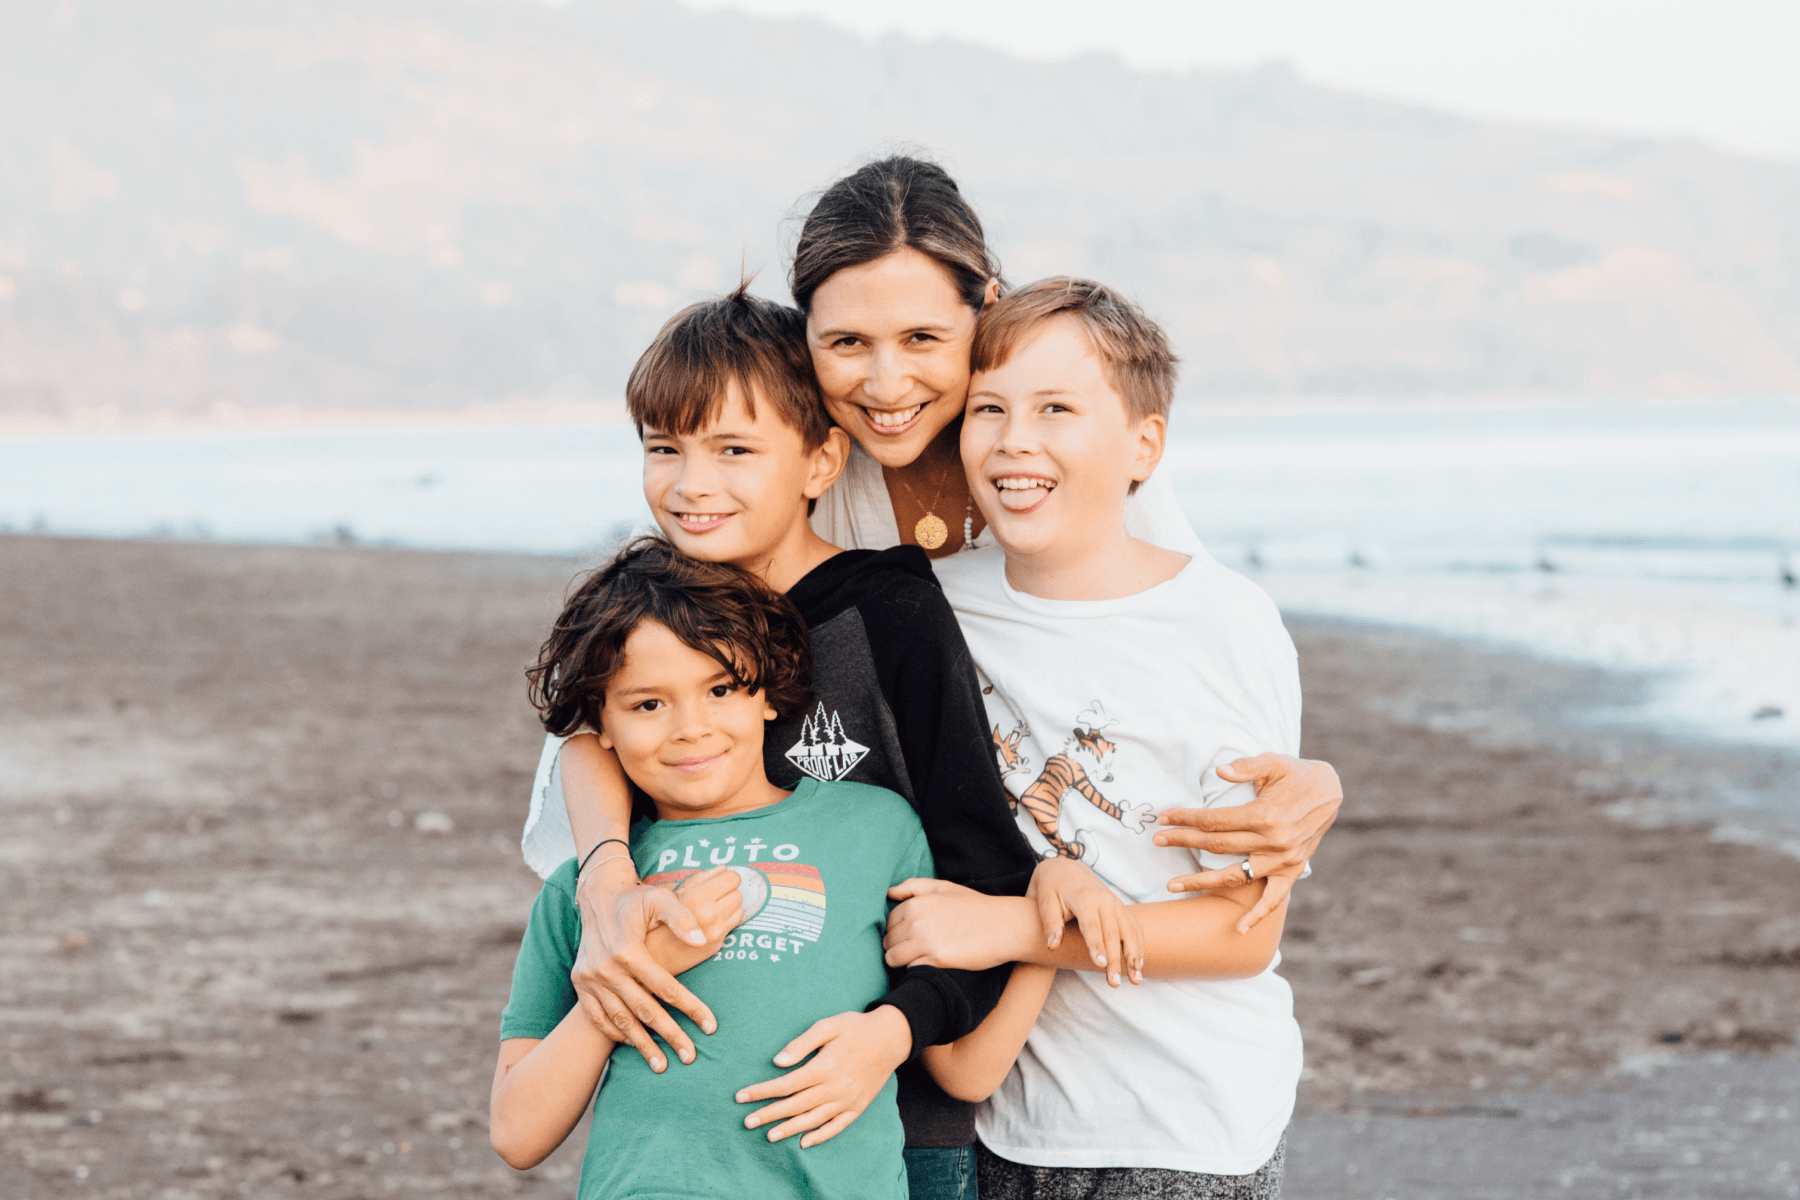 Sabrina Moyle hugging her three children on the beach.